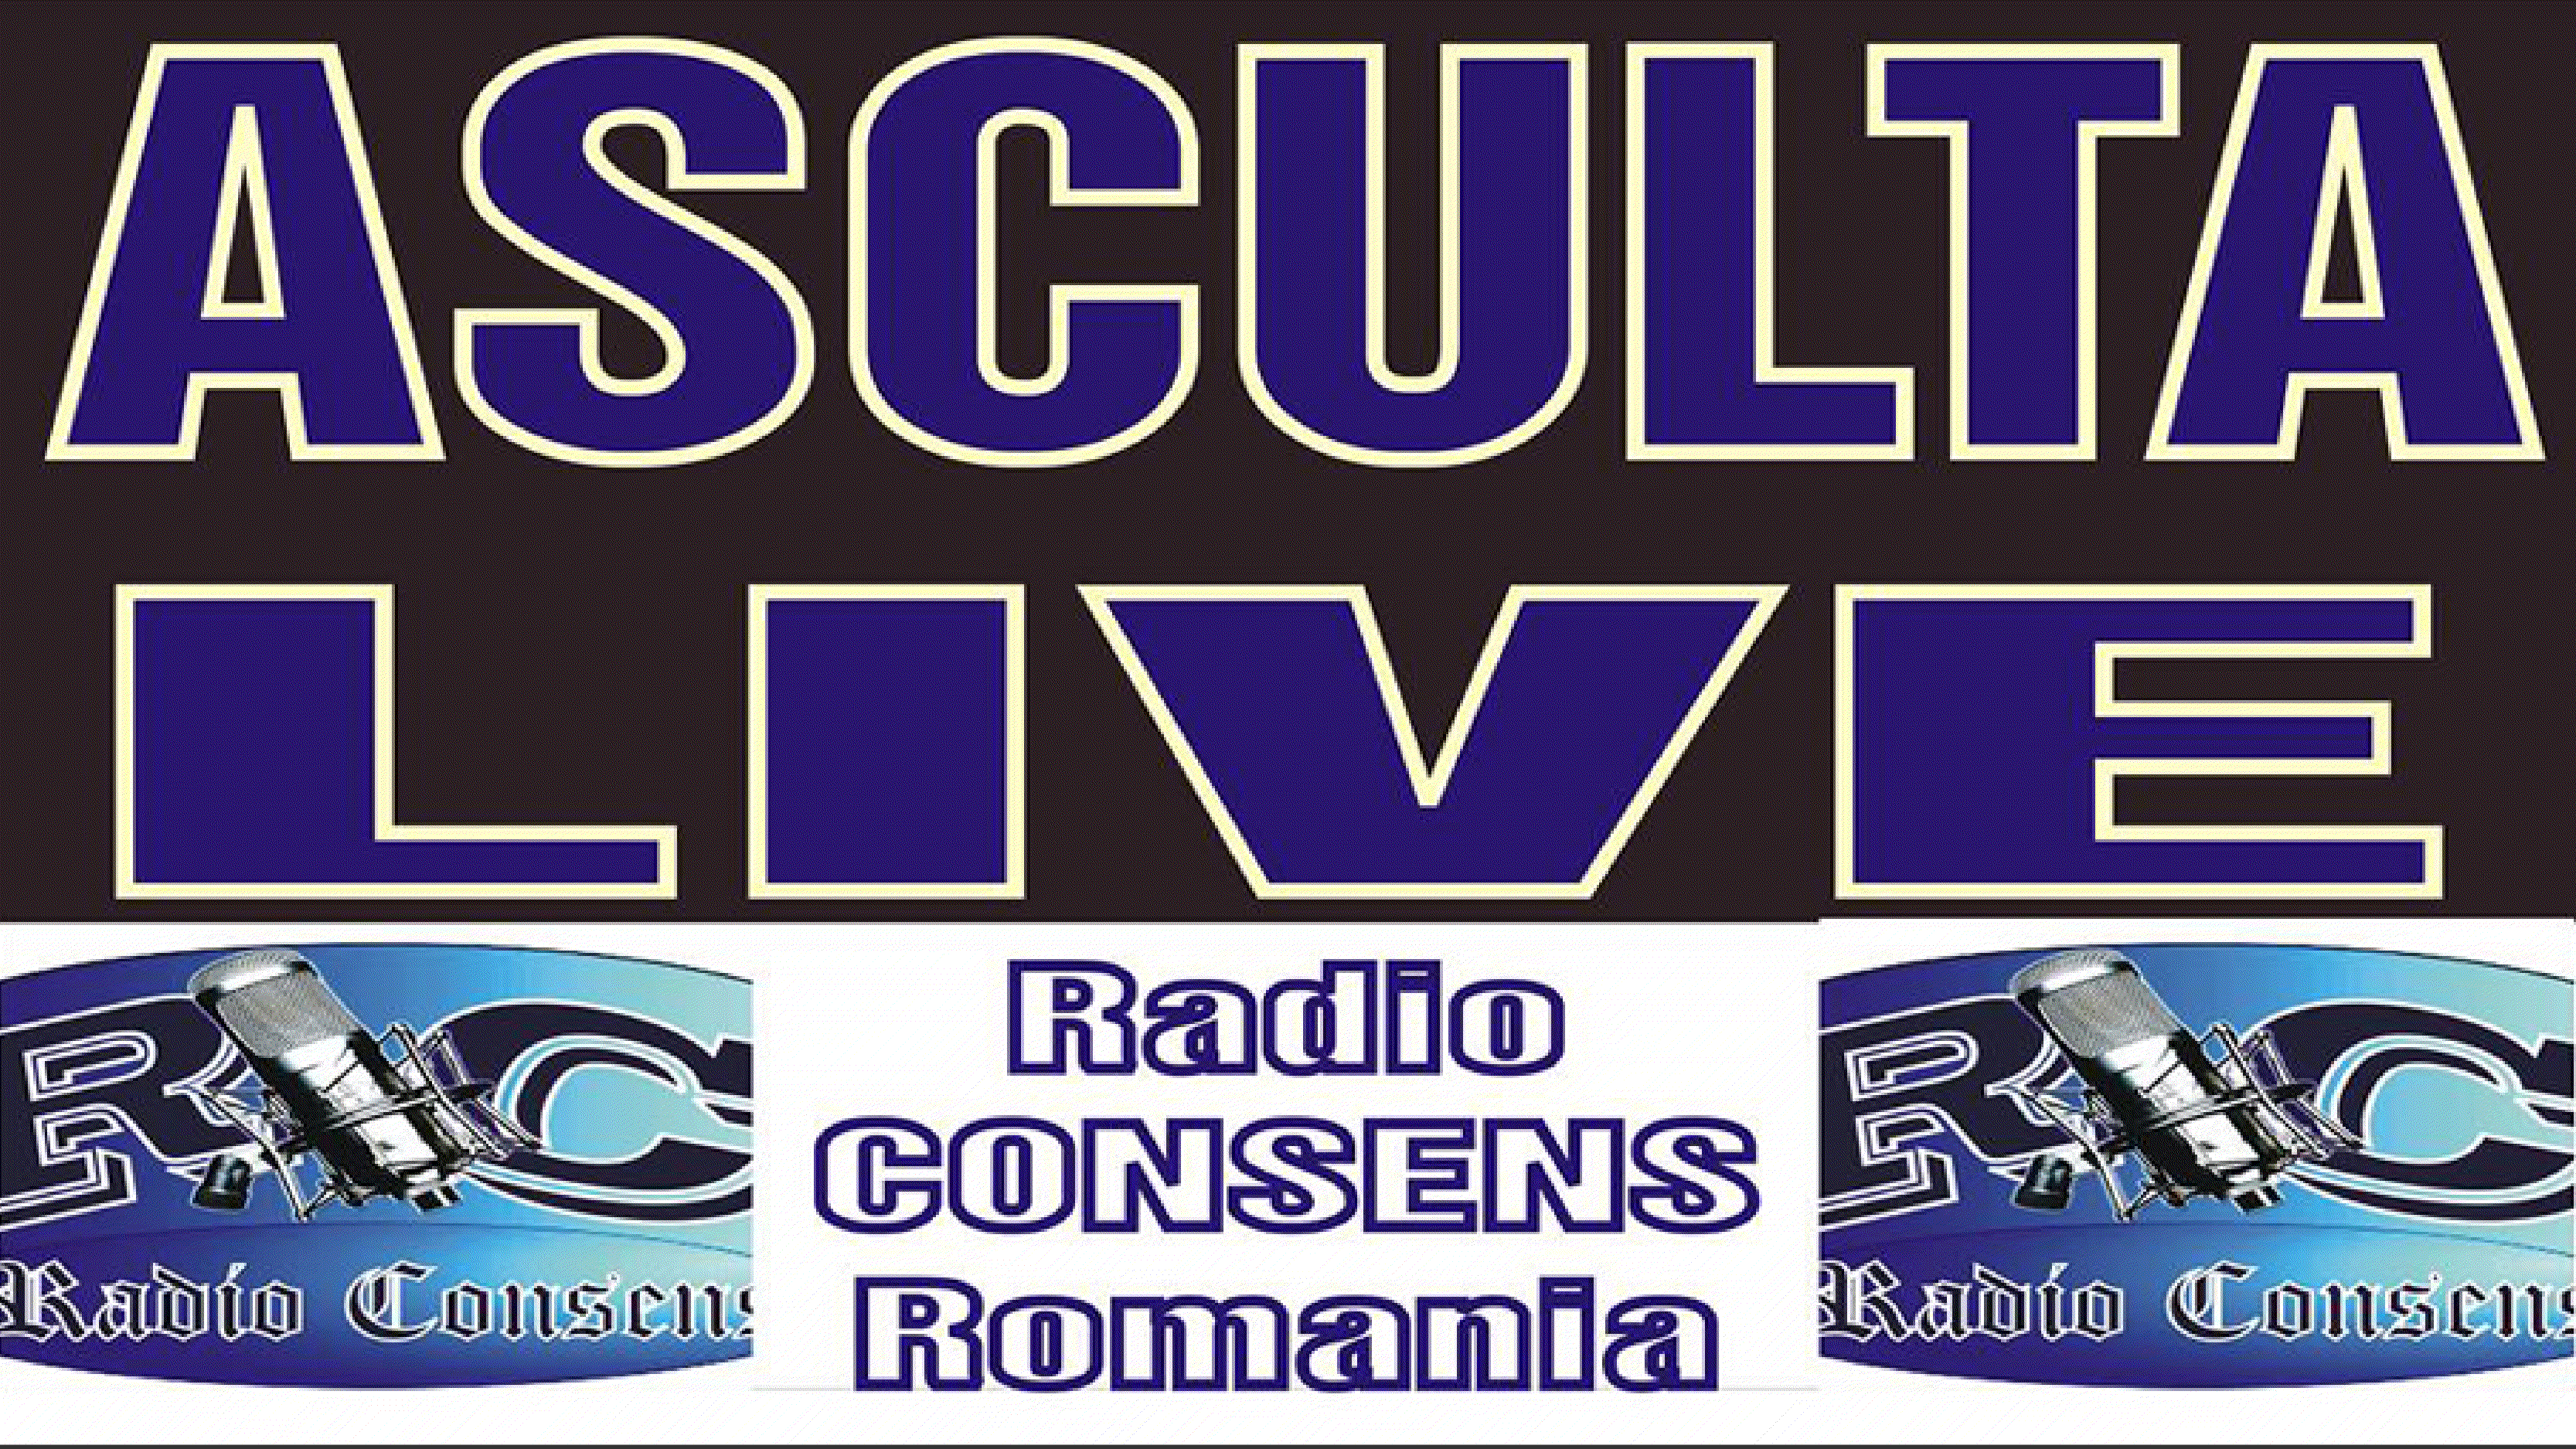 Asculta Radio Consens Romania